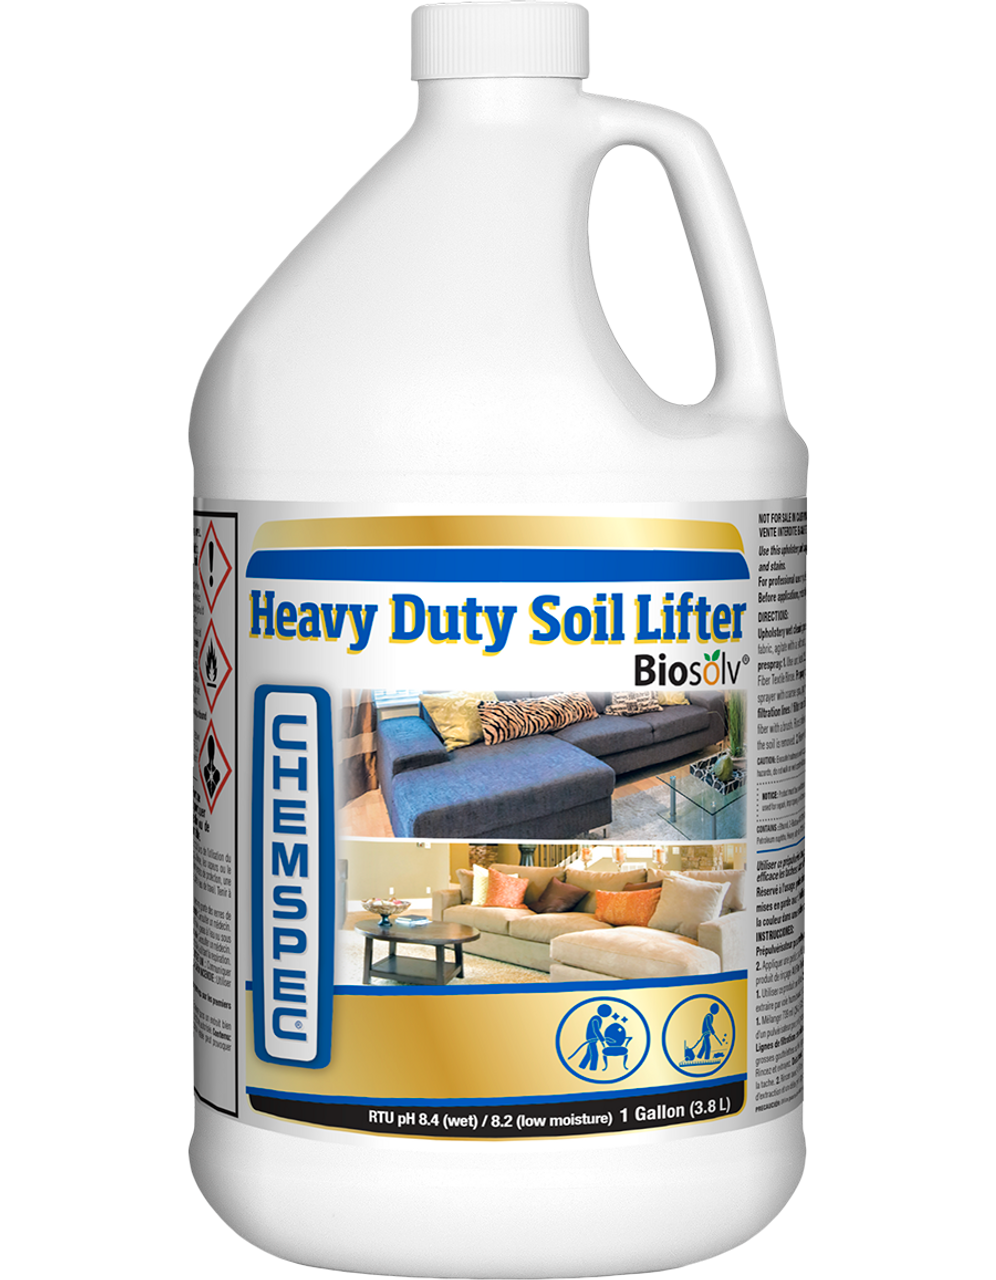 Chemspec Heavy Duty Soil Lifter with Biosolv - 1gal